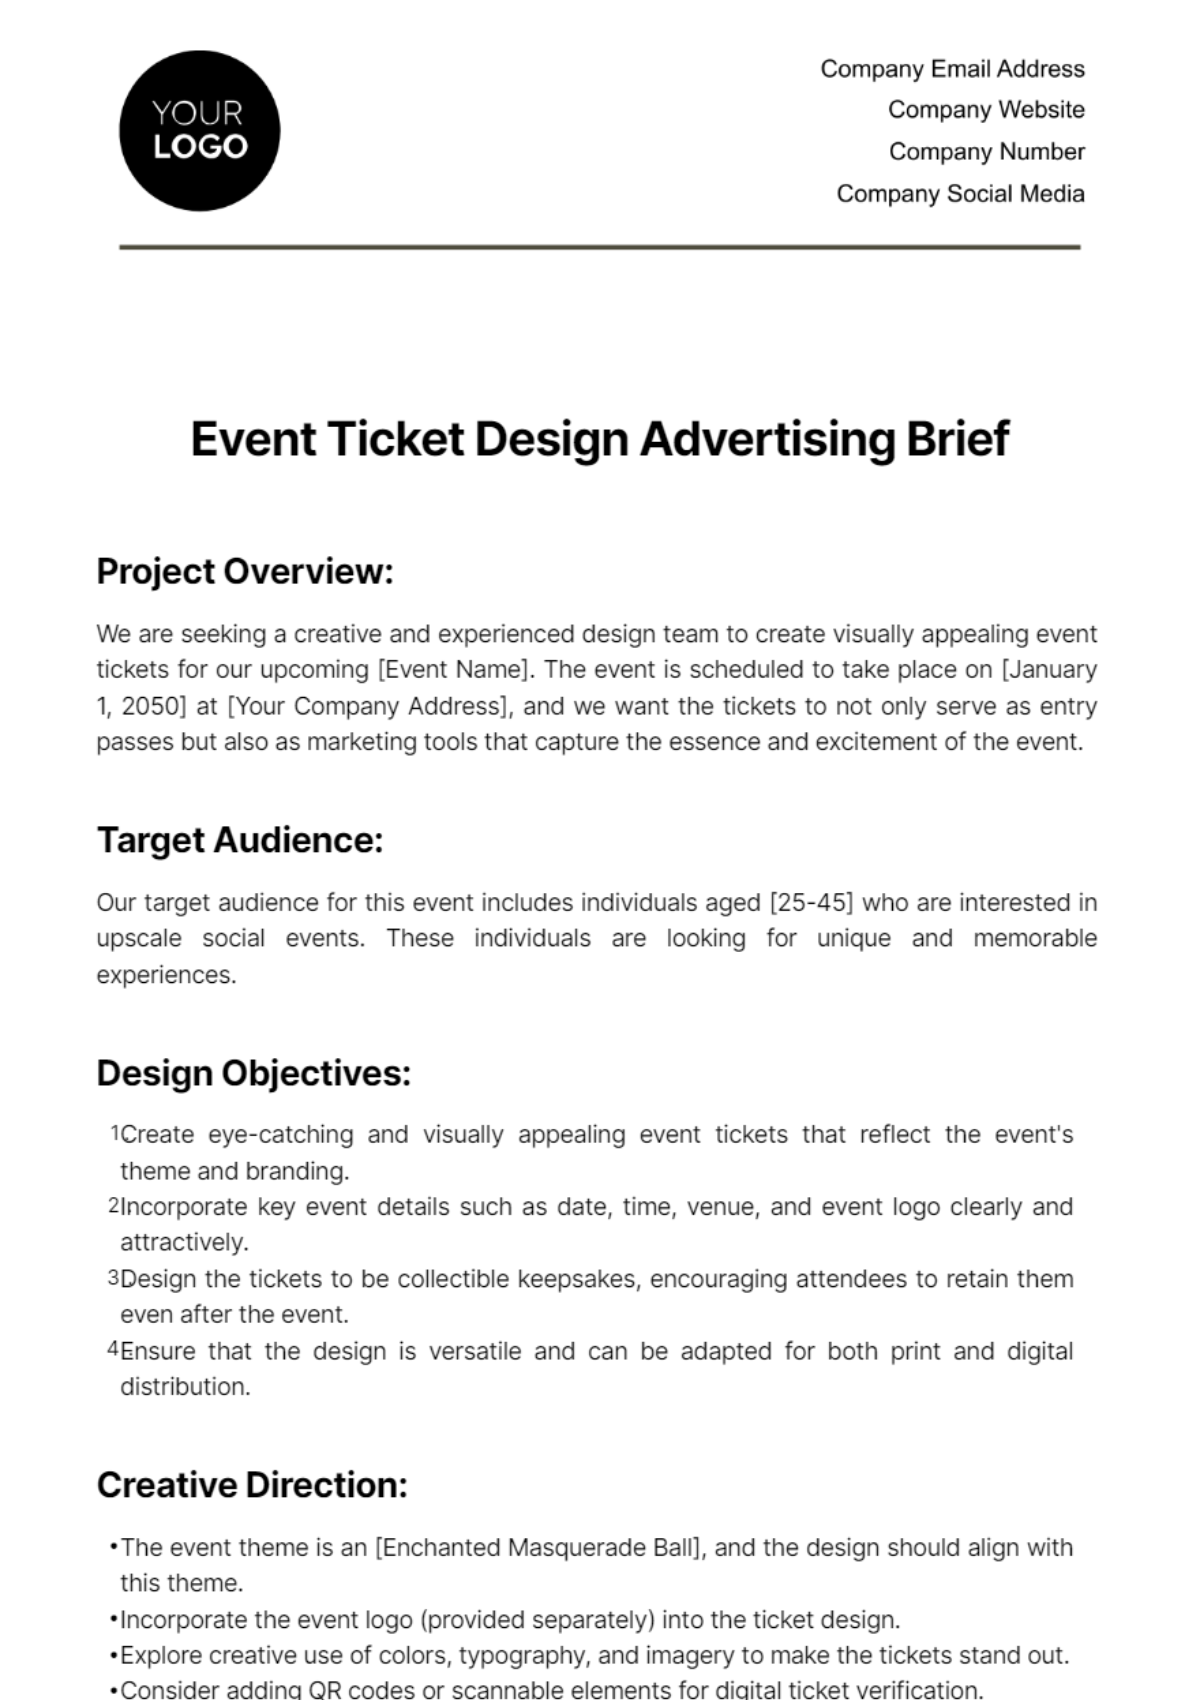 Event Ticket Design Advertising Brief Template